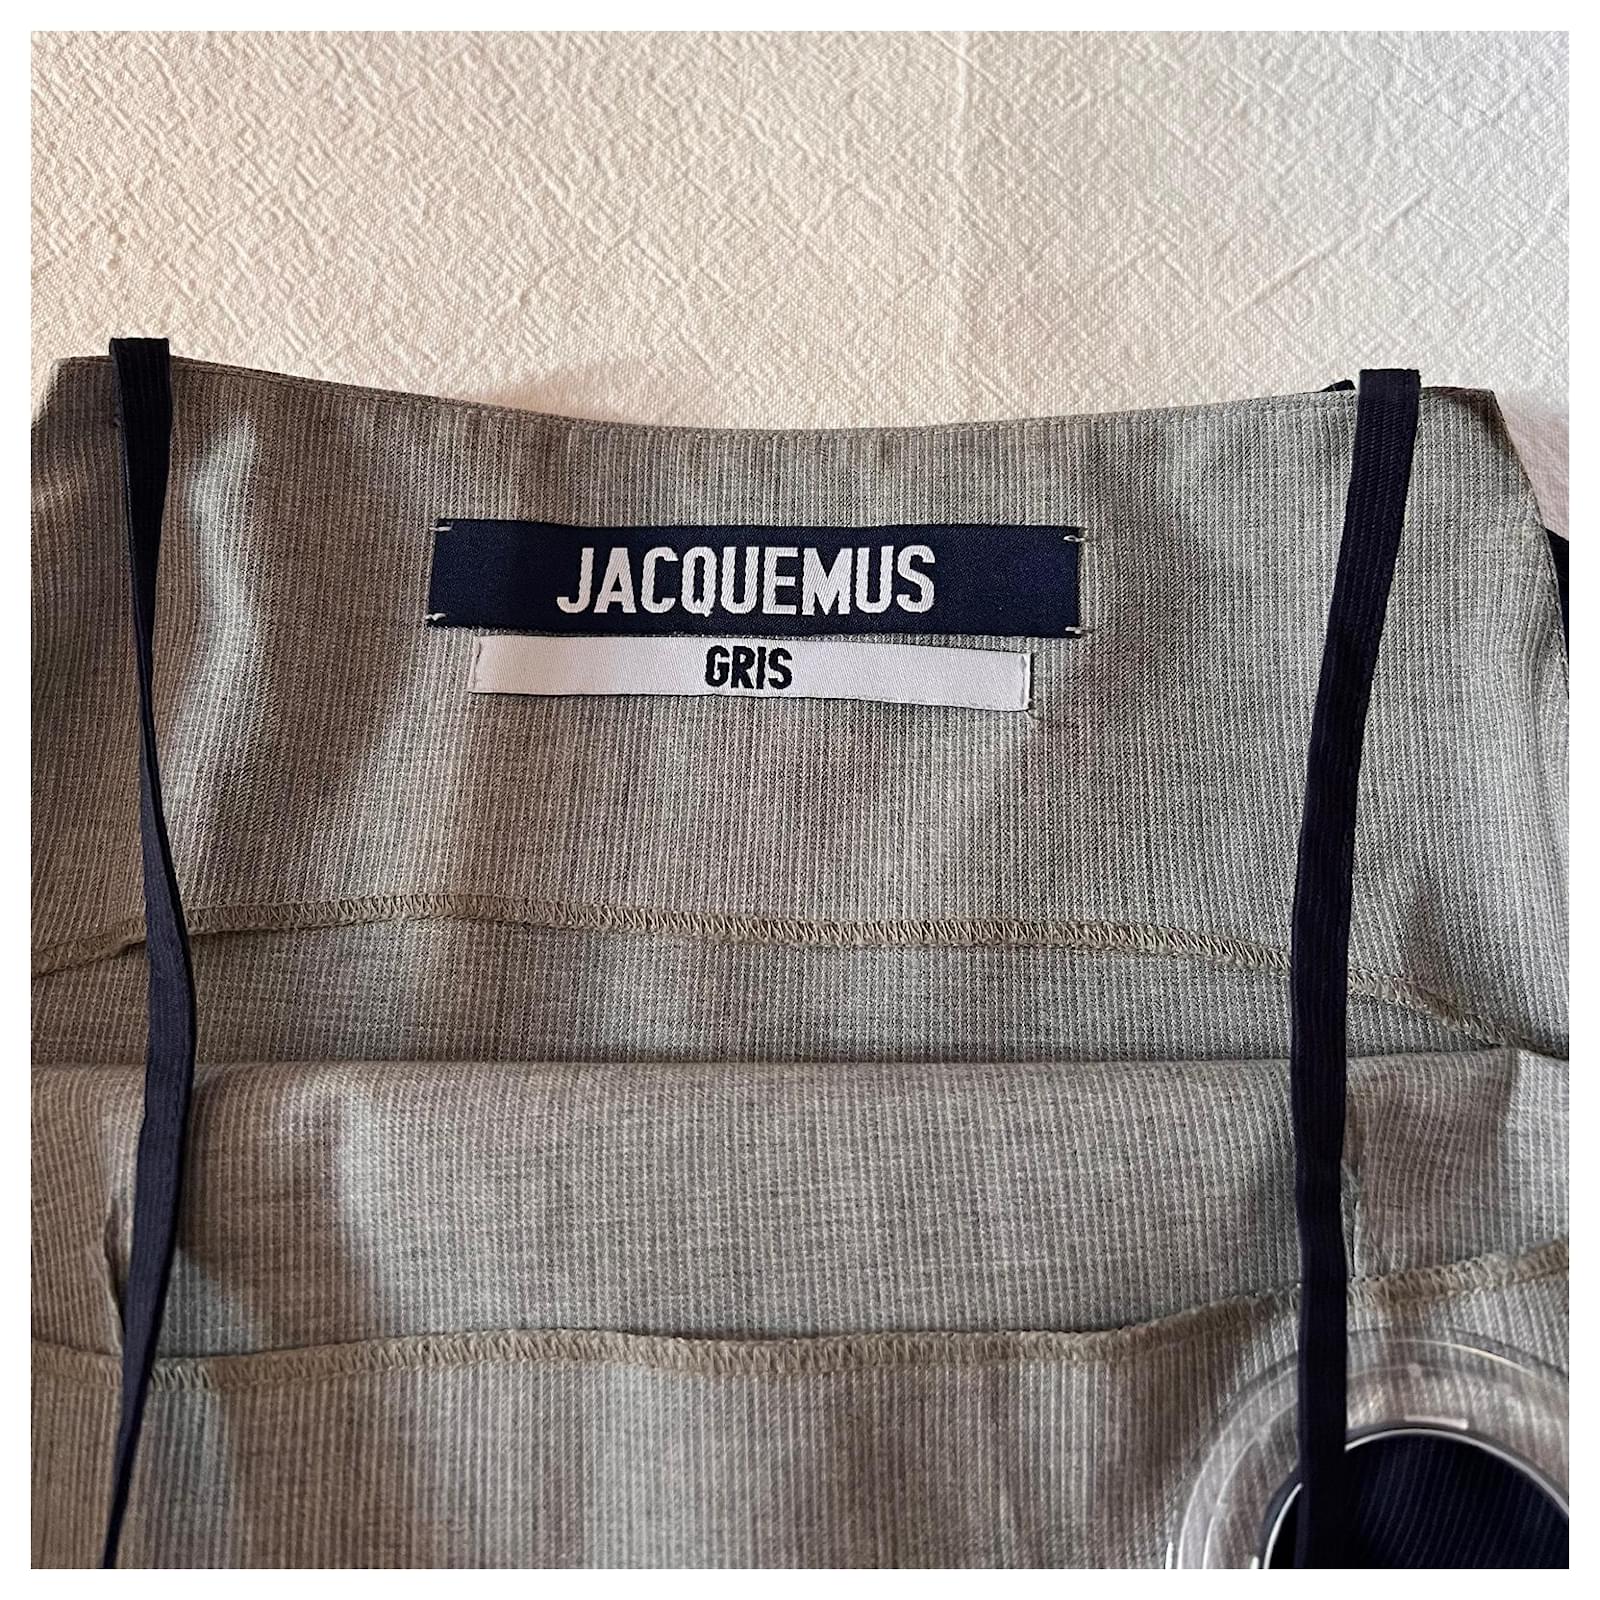 Jacquemus Fall 2015